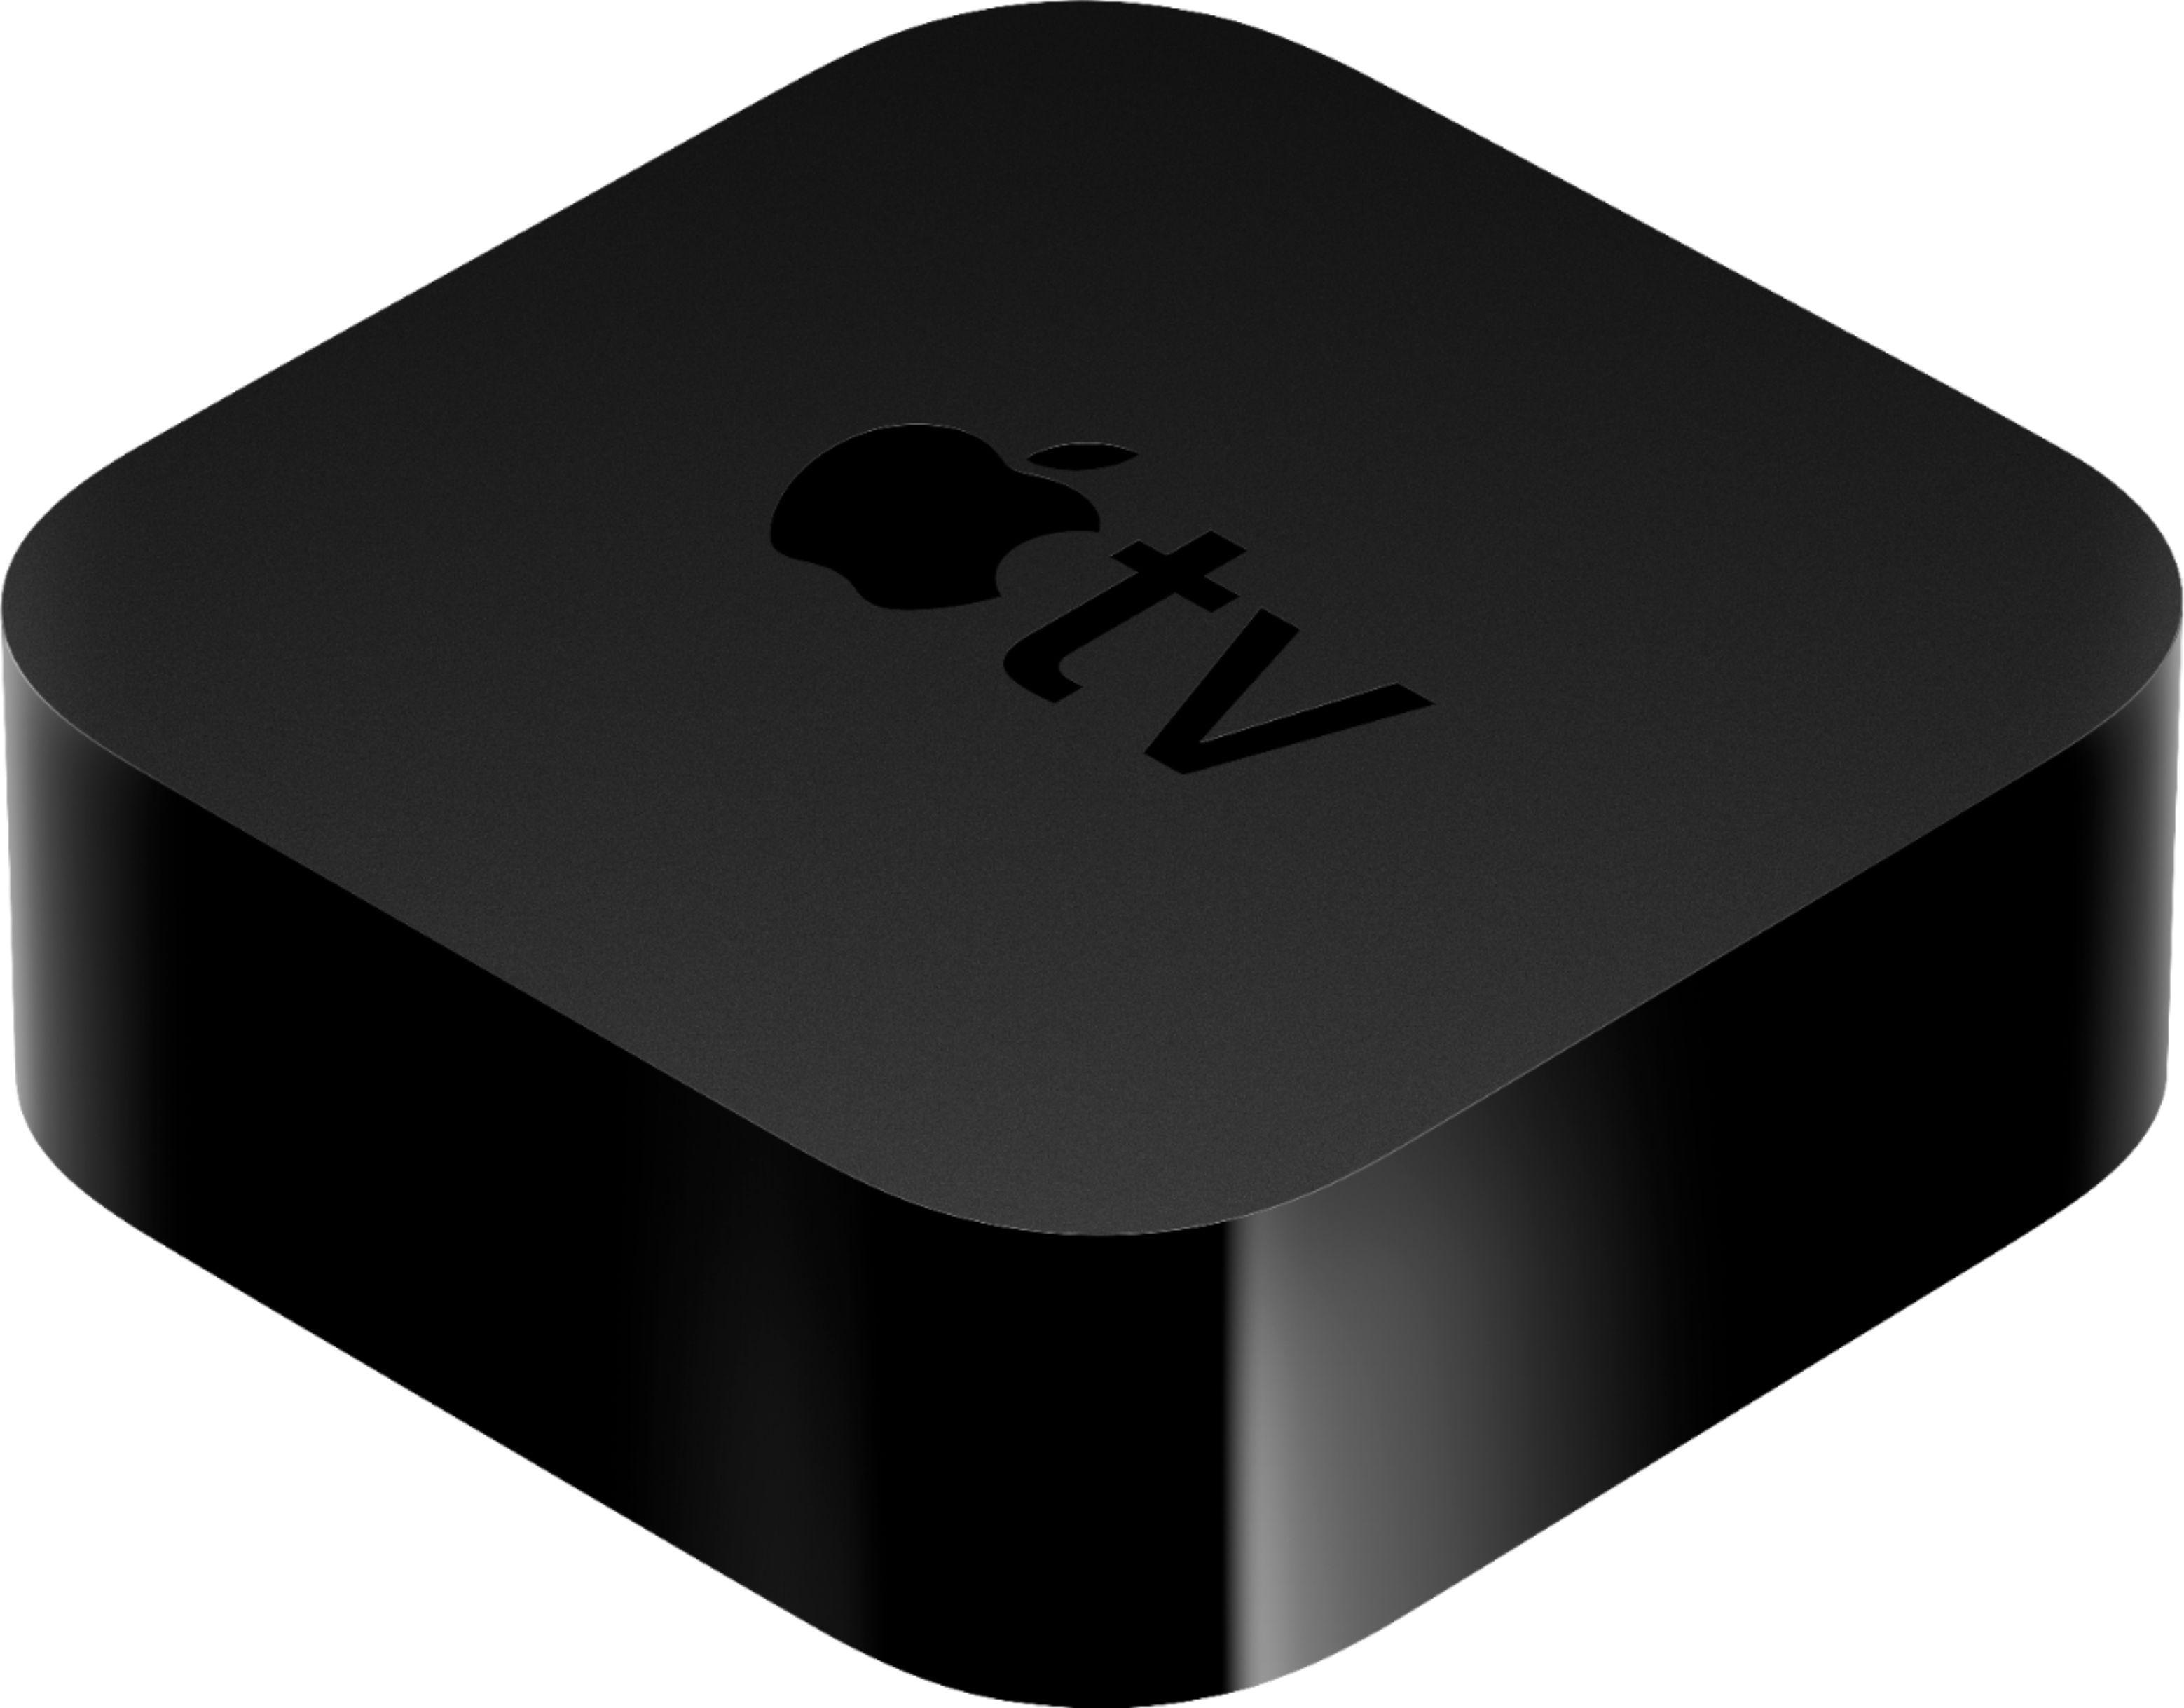 Best Buy: Apple TV 4K 32GB (2nd Generation) Black MXGY2LL/A